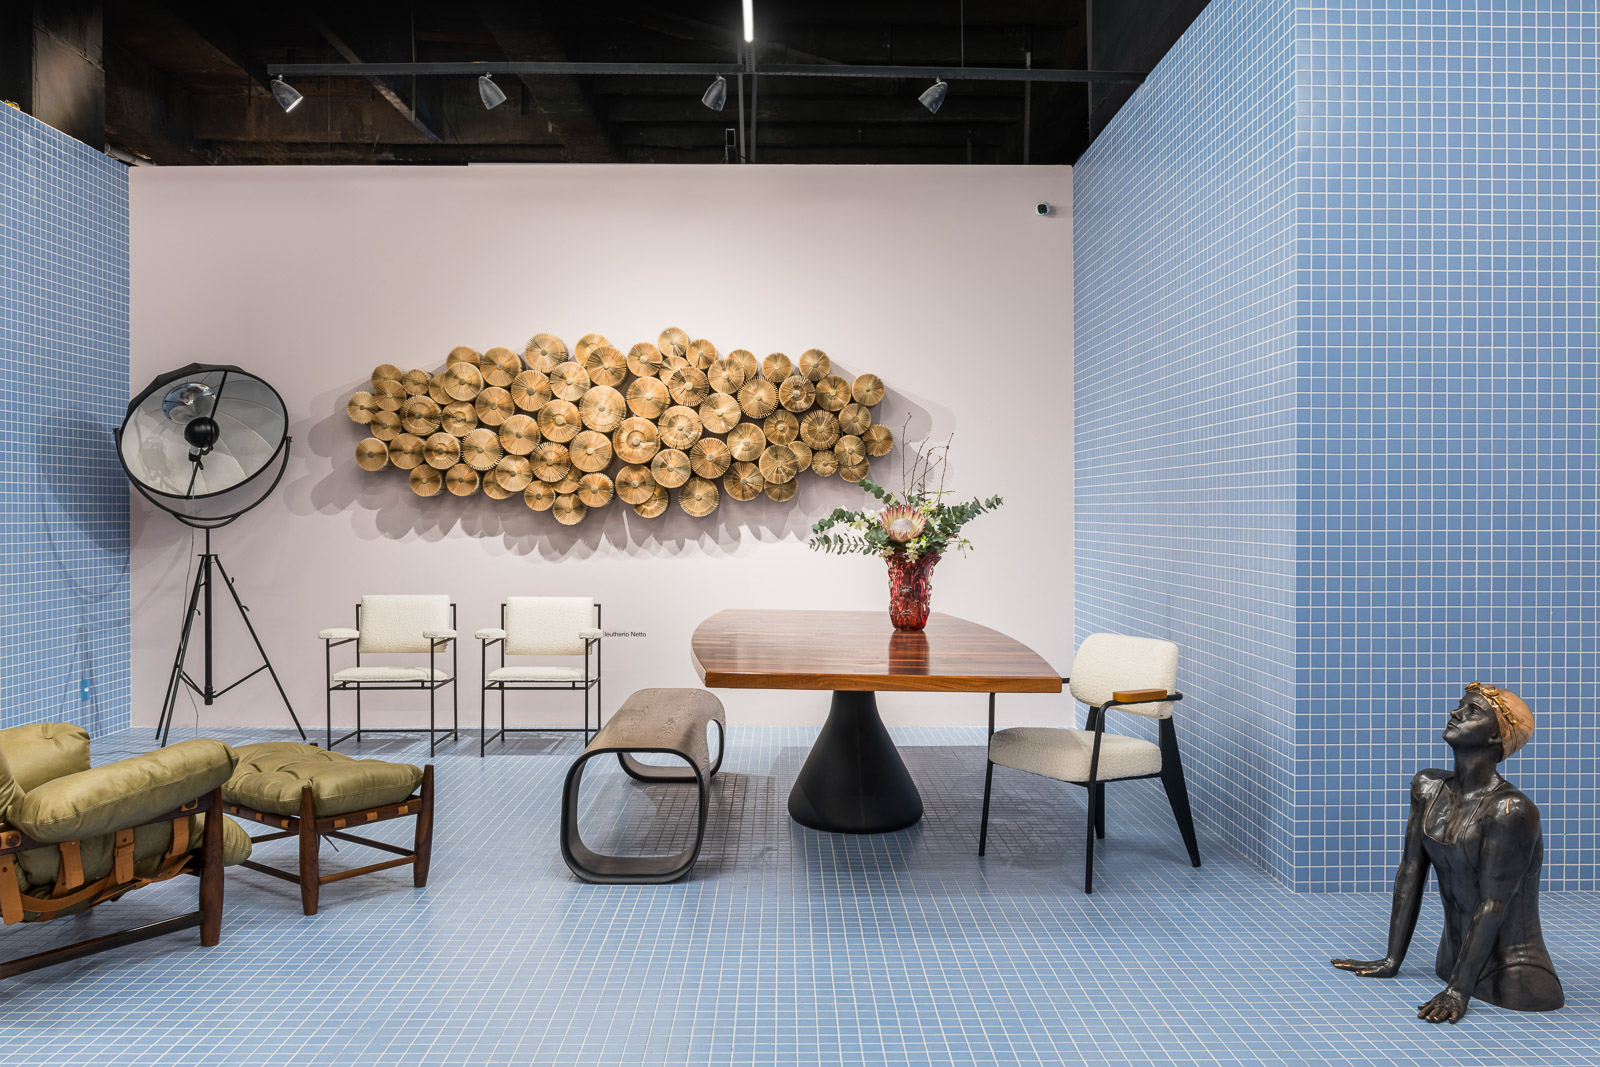 carlos navero arquitetura galeria pirajui casacor sp 2022 decoracao design banco mesa cadeira escultura poltrona arte